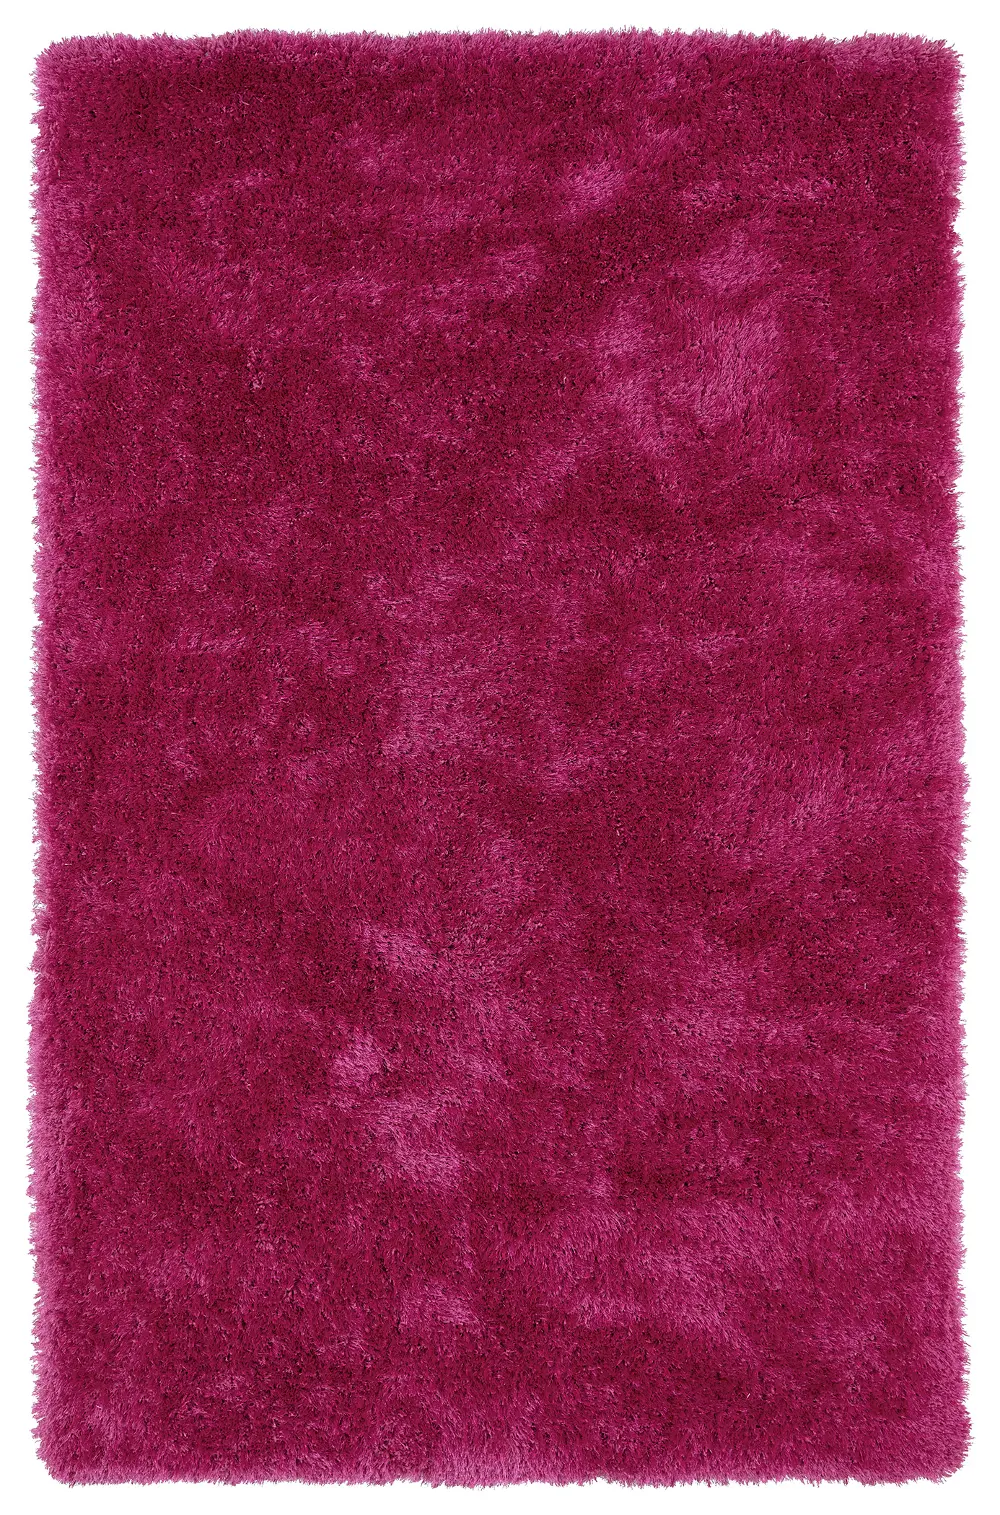 8 x 10 Large Pink Shag Rug - Posh-1